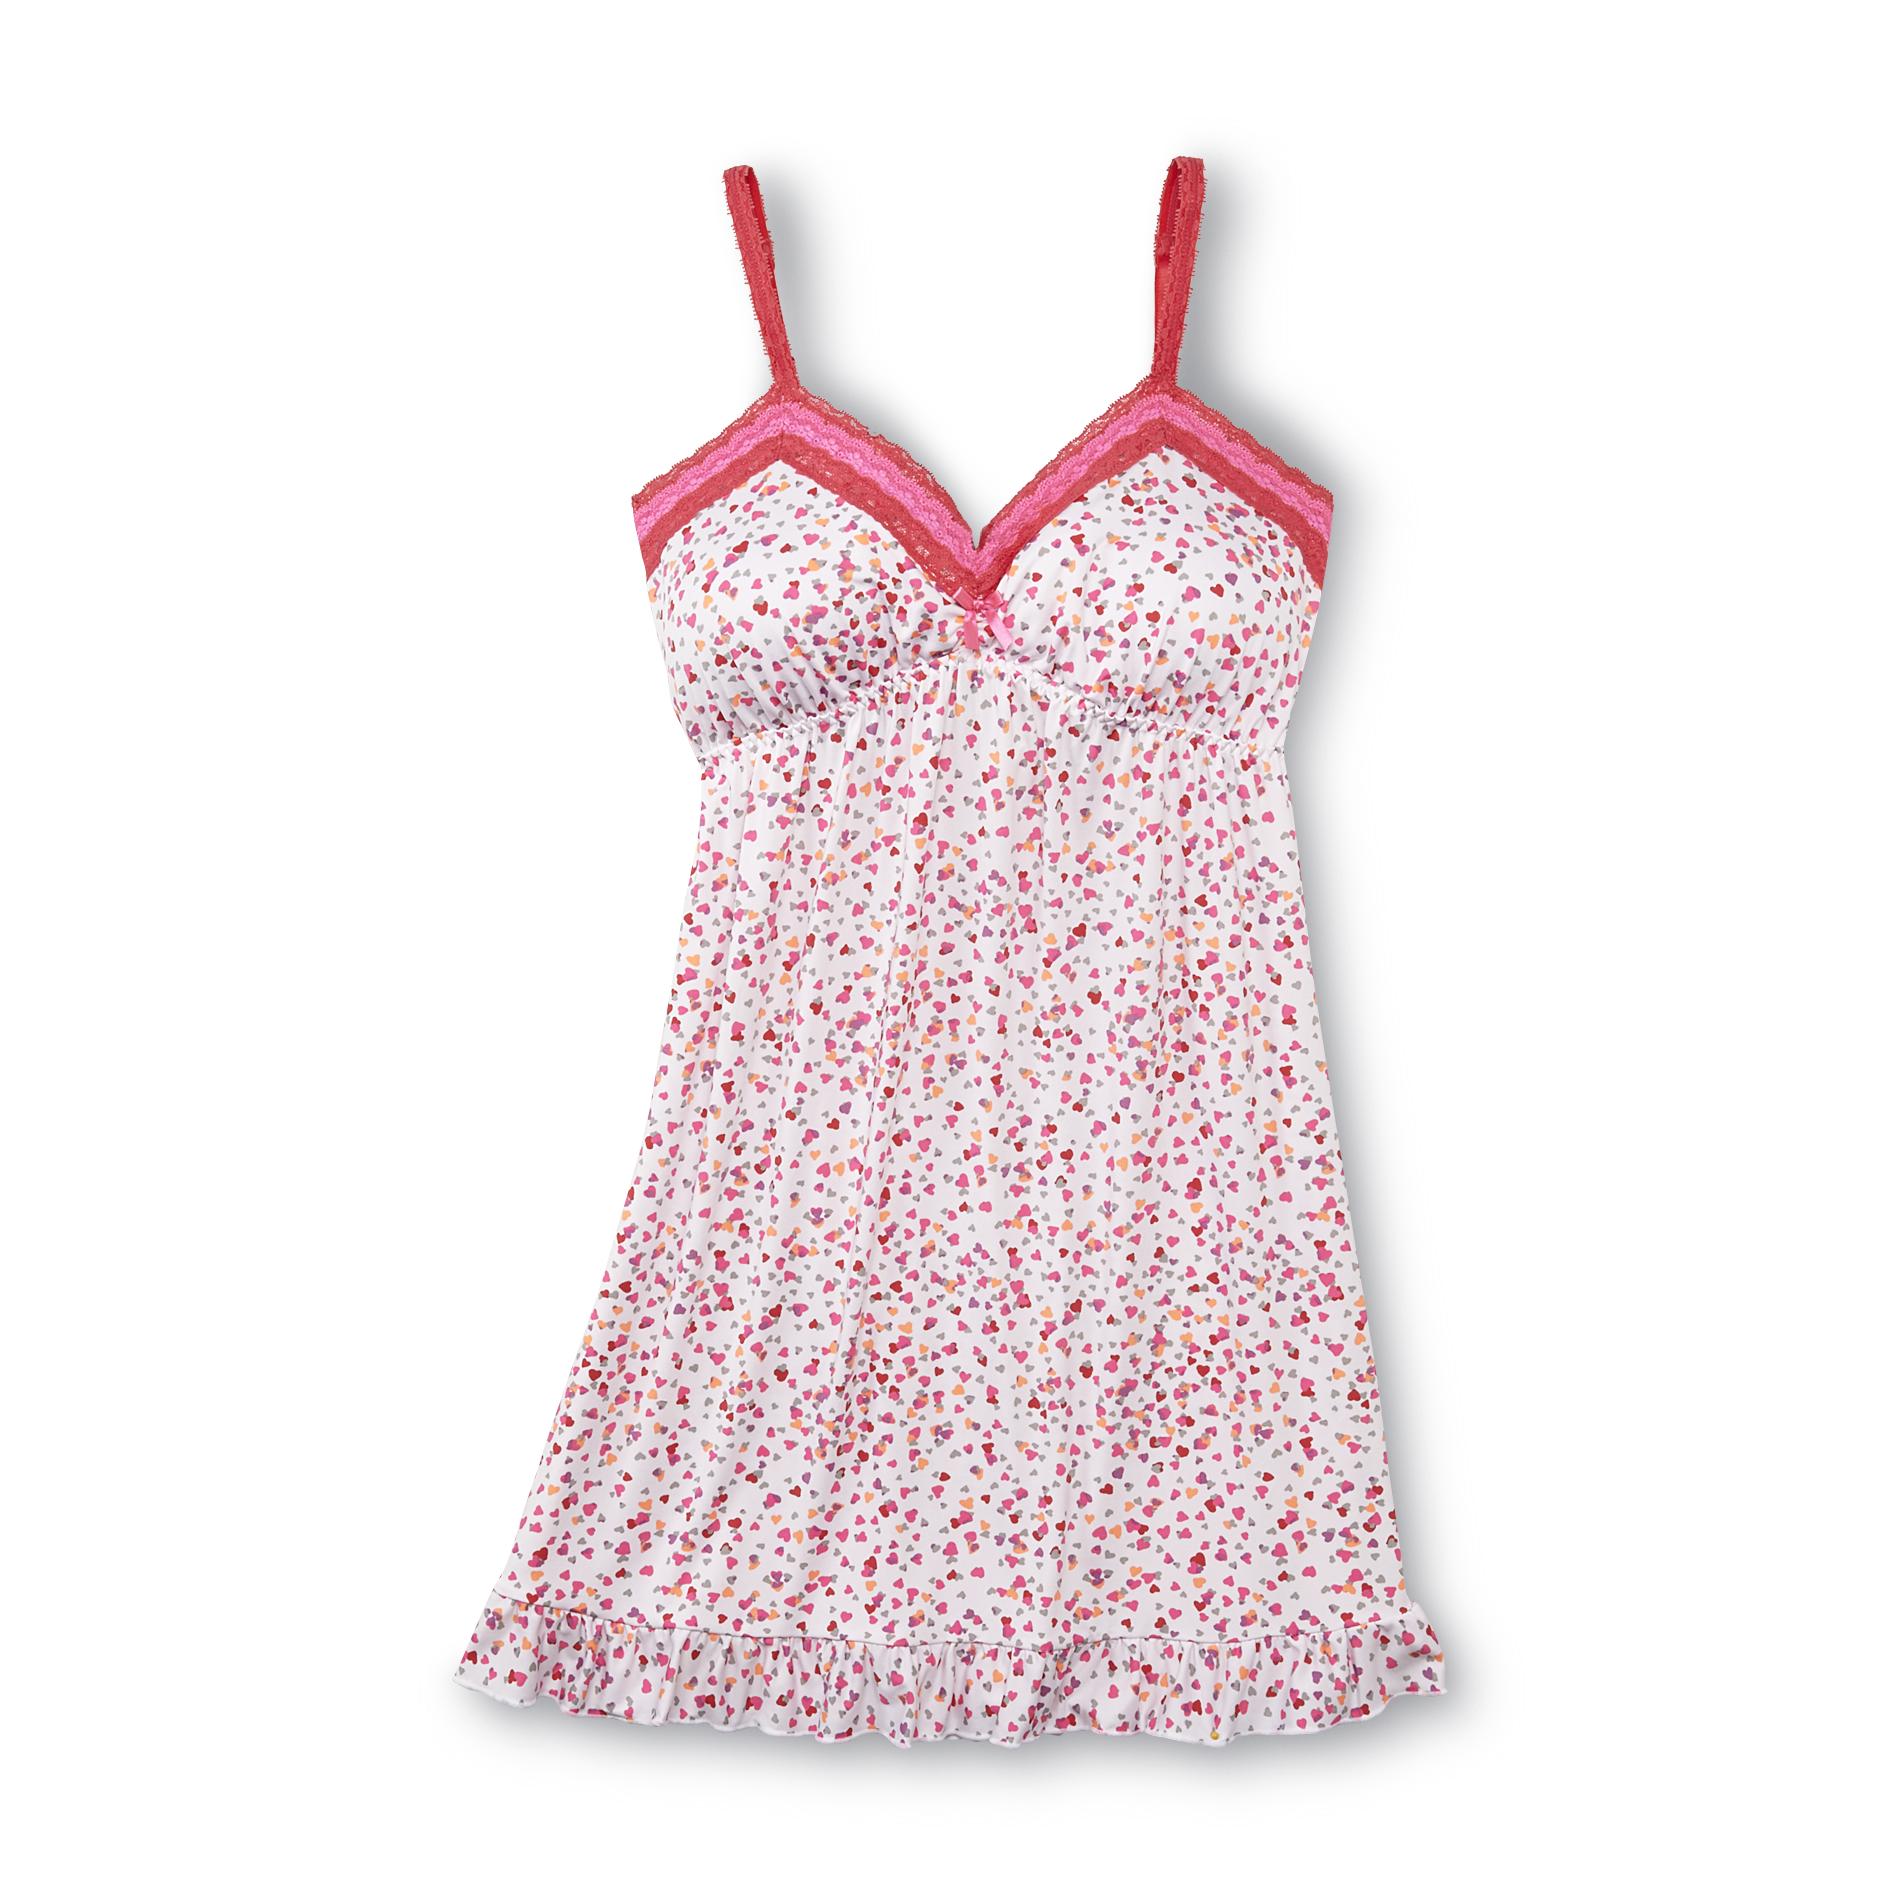 Joe Boxer Women's Camisole Nightgown - Hearts